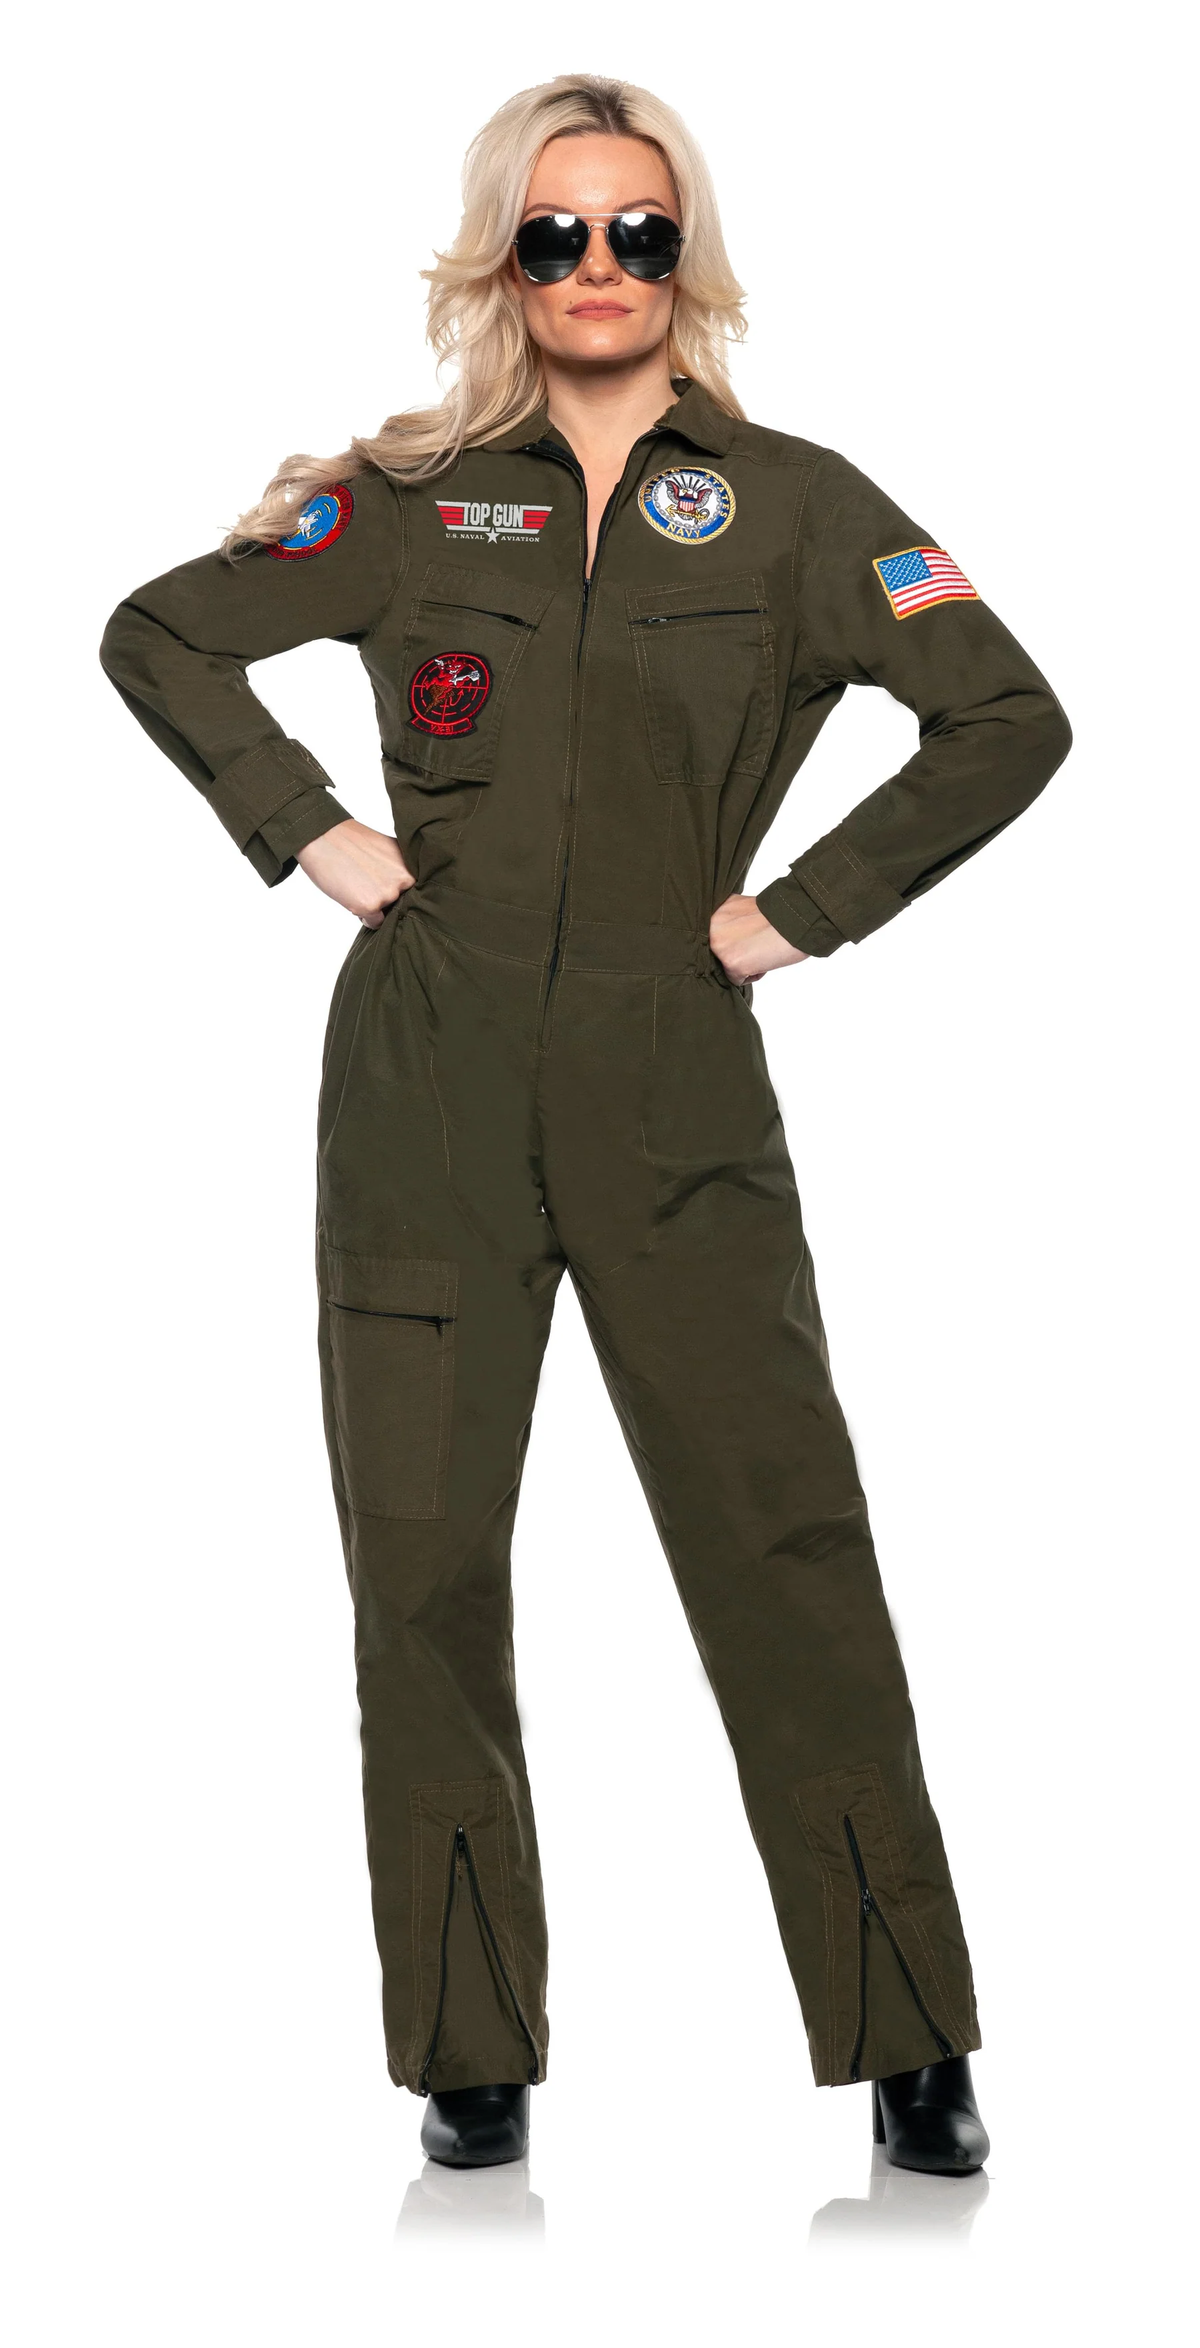 Top Gun Pilot Jumpsuit Women's Adult Costume